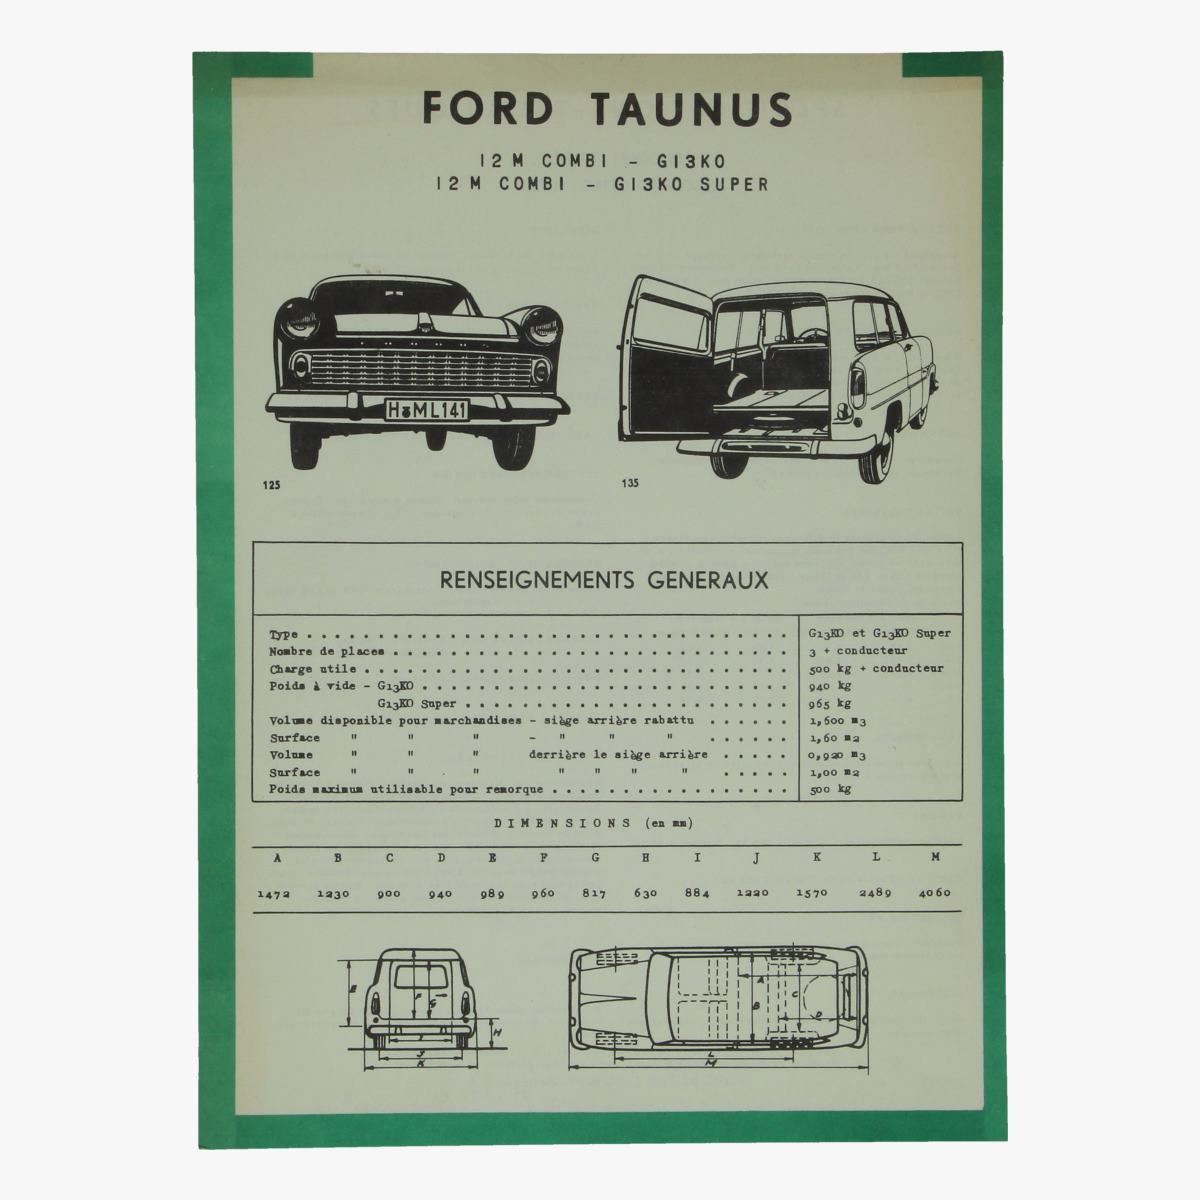 Afbeeldingen van specifications techniques ford taunus 12m combi - g13ko ford motor comp.